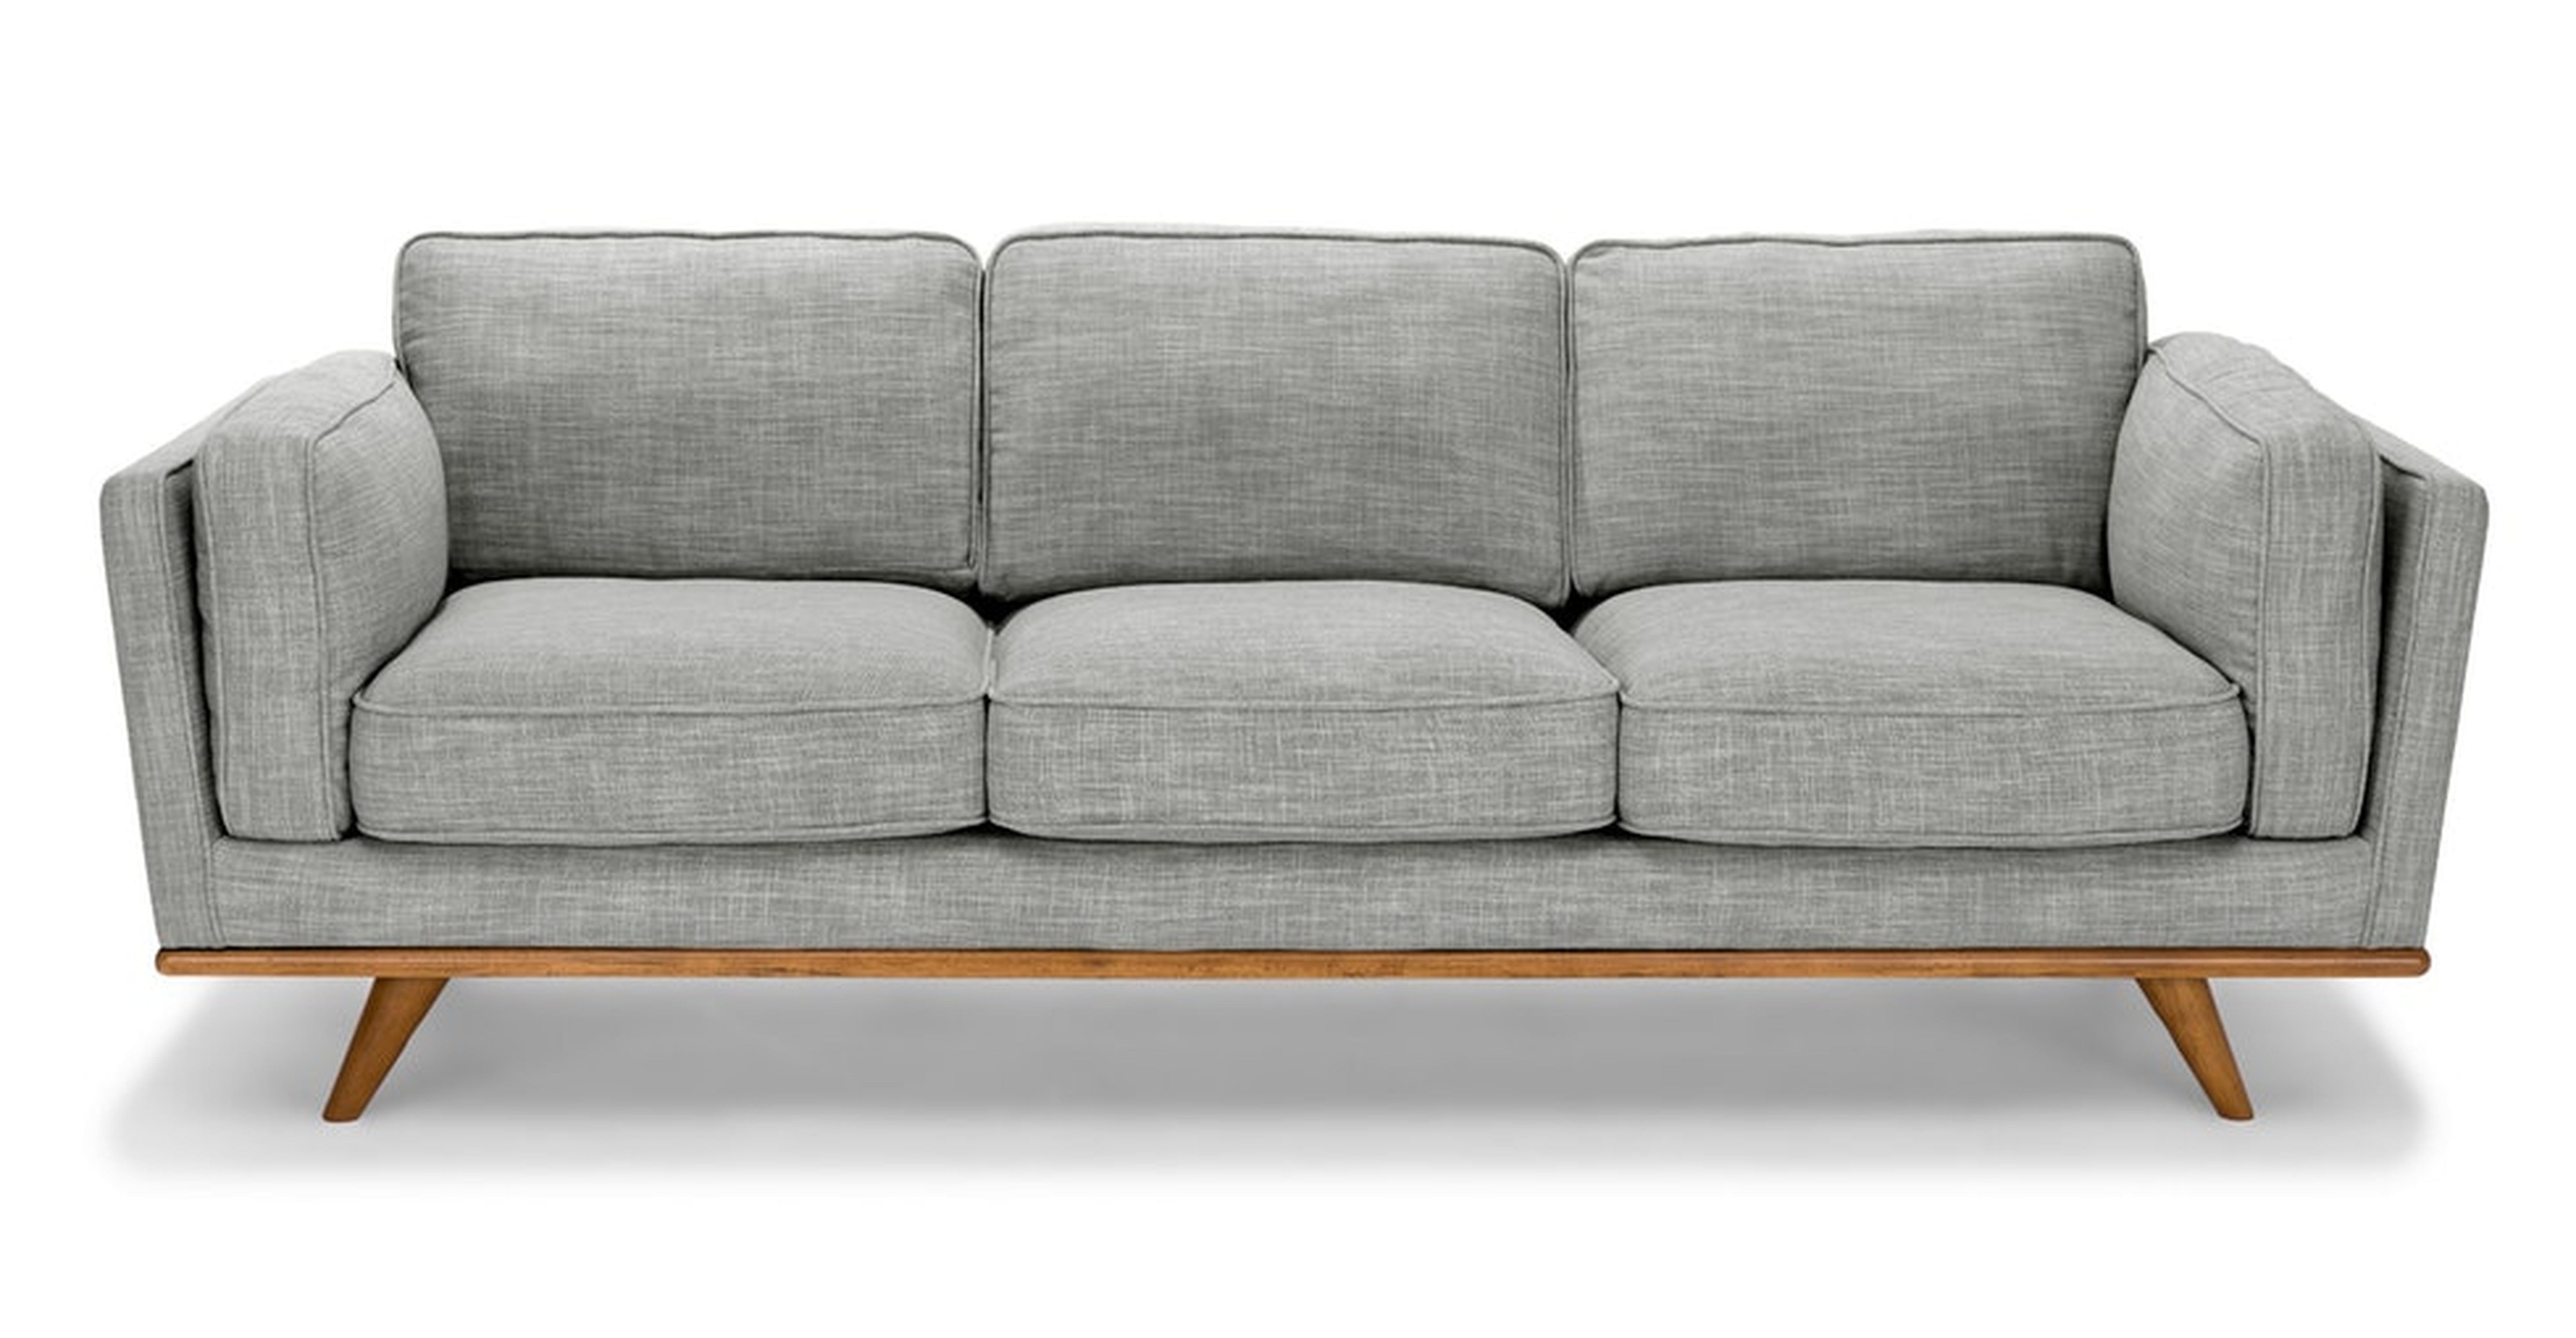 Timber Pebble Gray Sofa - Article